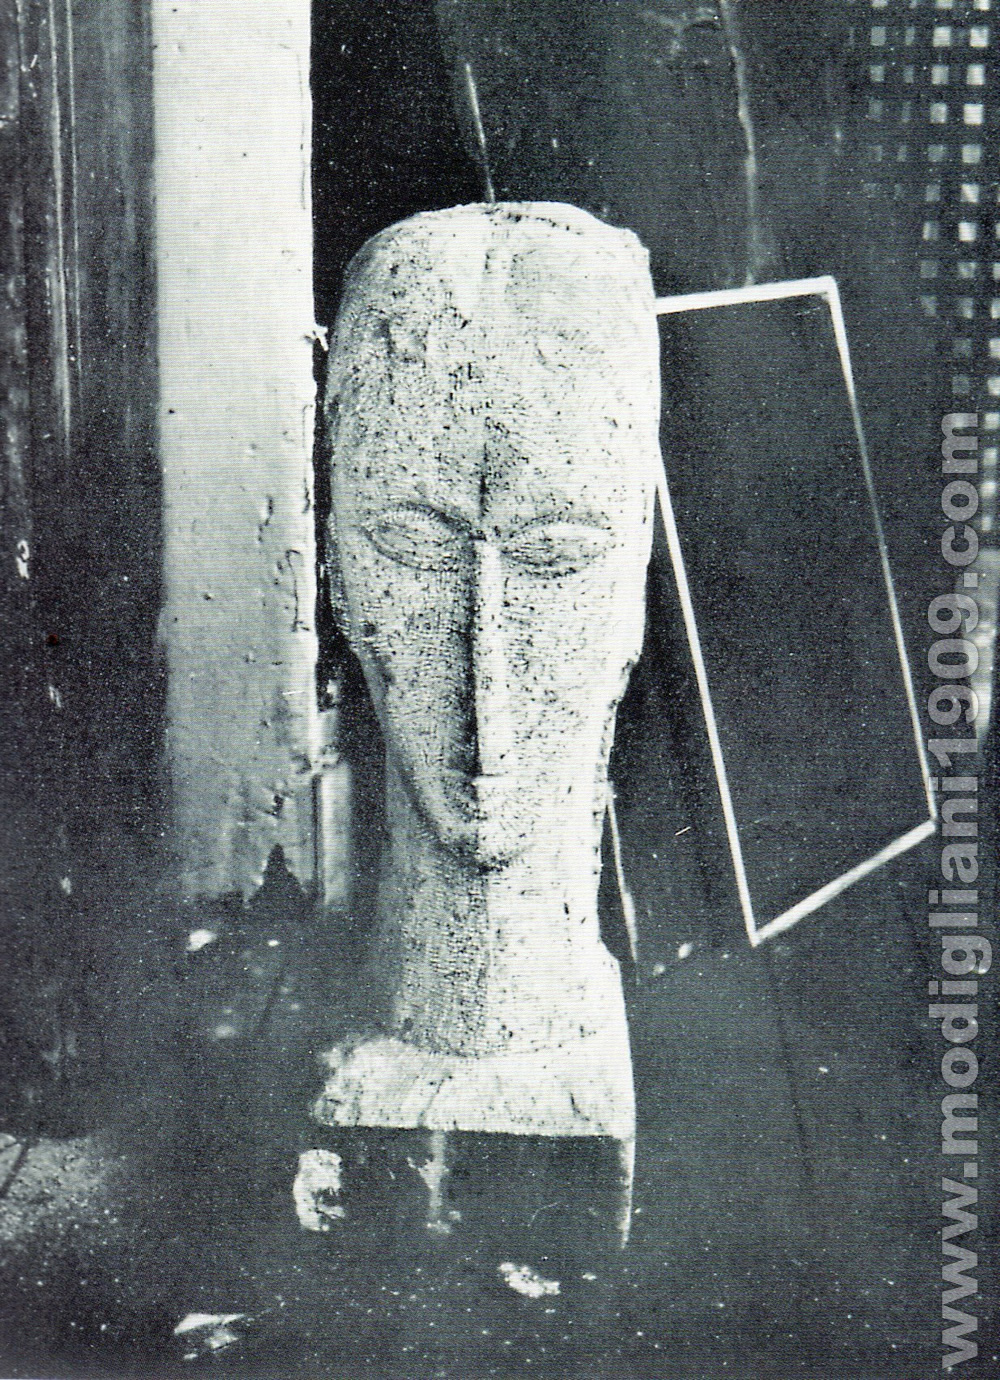 Head (lost), Modigliani, 1910 - 1911, photo taken in the Cardoso atelier in 1911